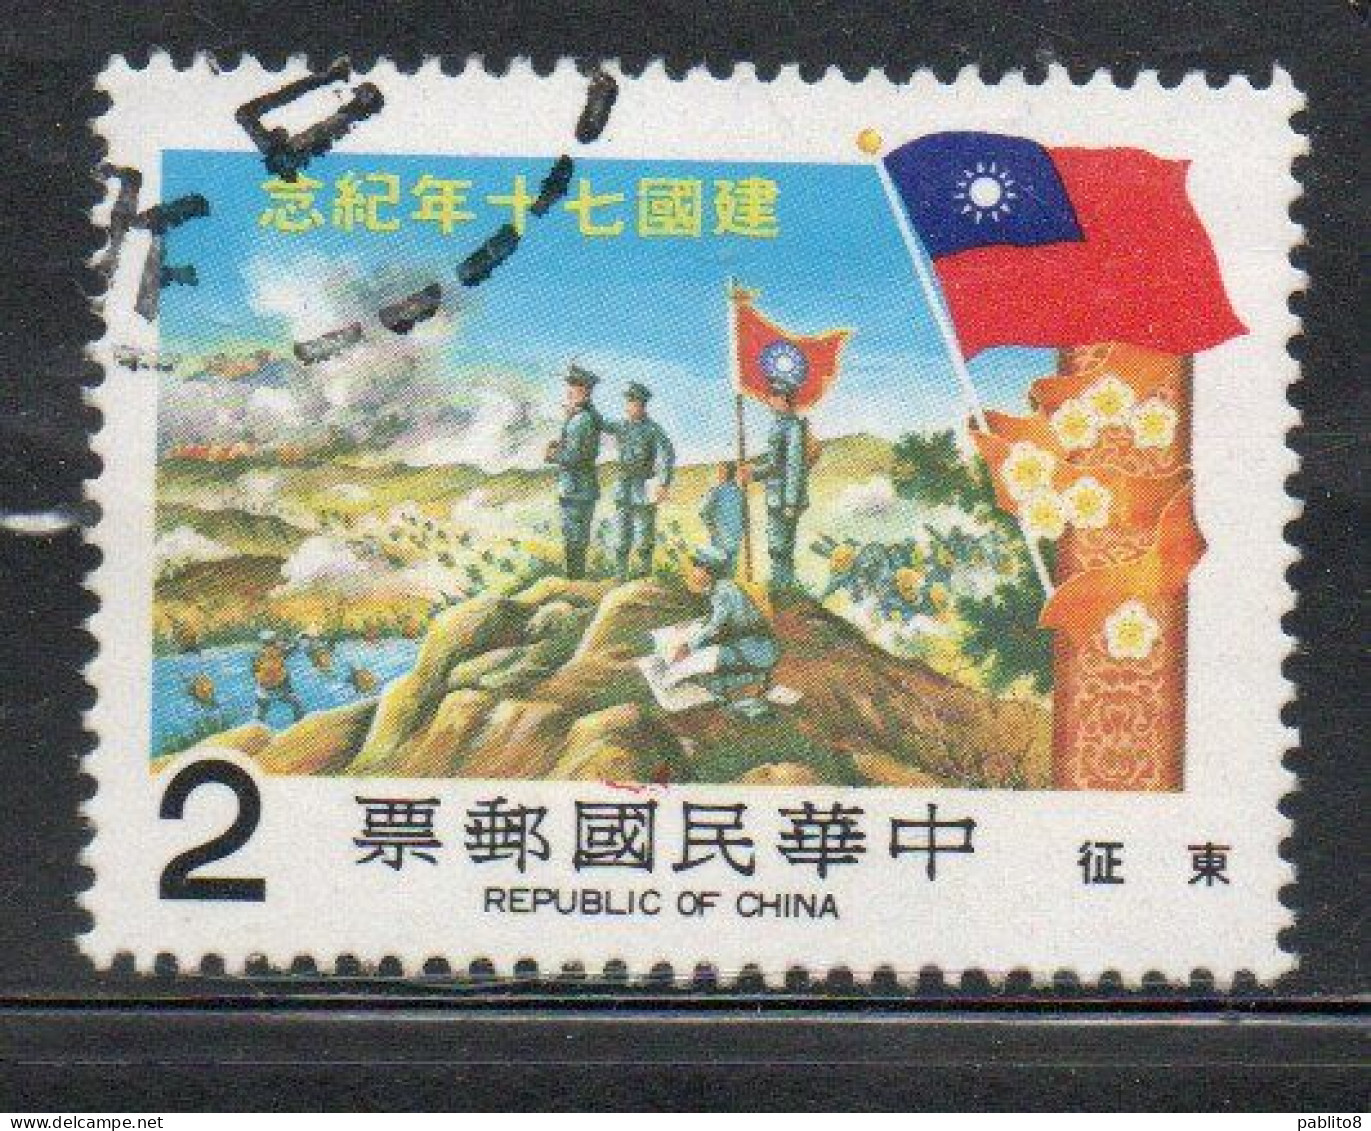 CHINA REPUBLIC CINA TAIWAN FORMOSA 1981 ANNIVERSARY REPUBLIC NORTHWARD EXPEDITION CHIANG ON HORSE 2$ USED USATO OBLITERE - Gebruikt